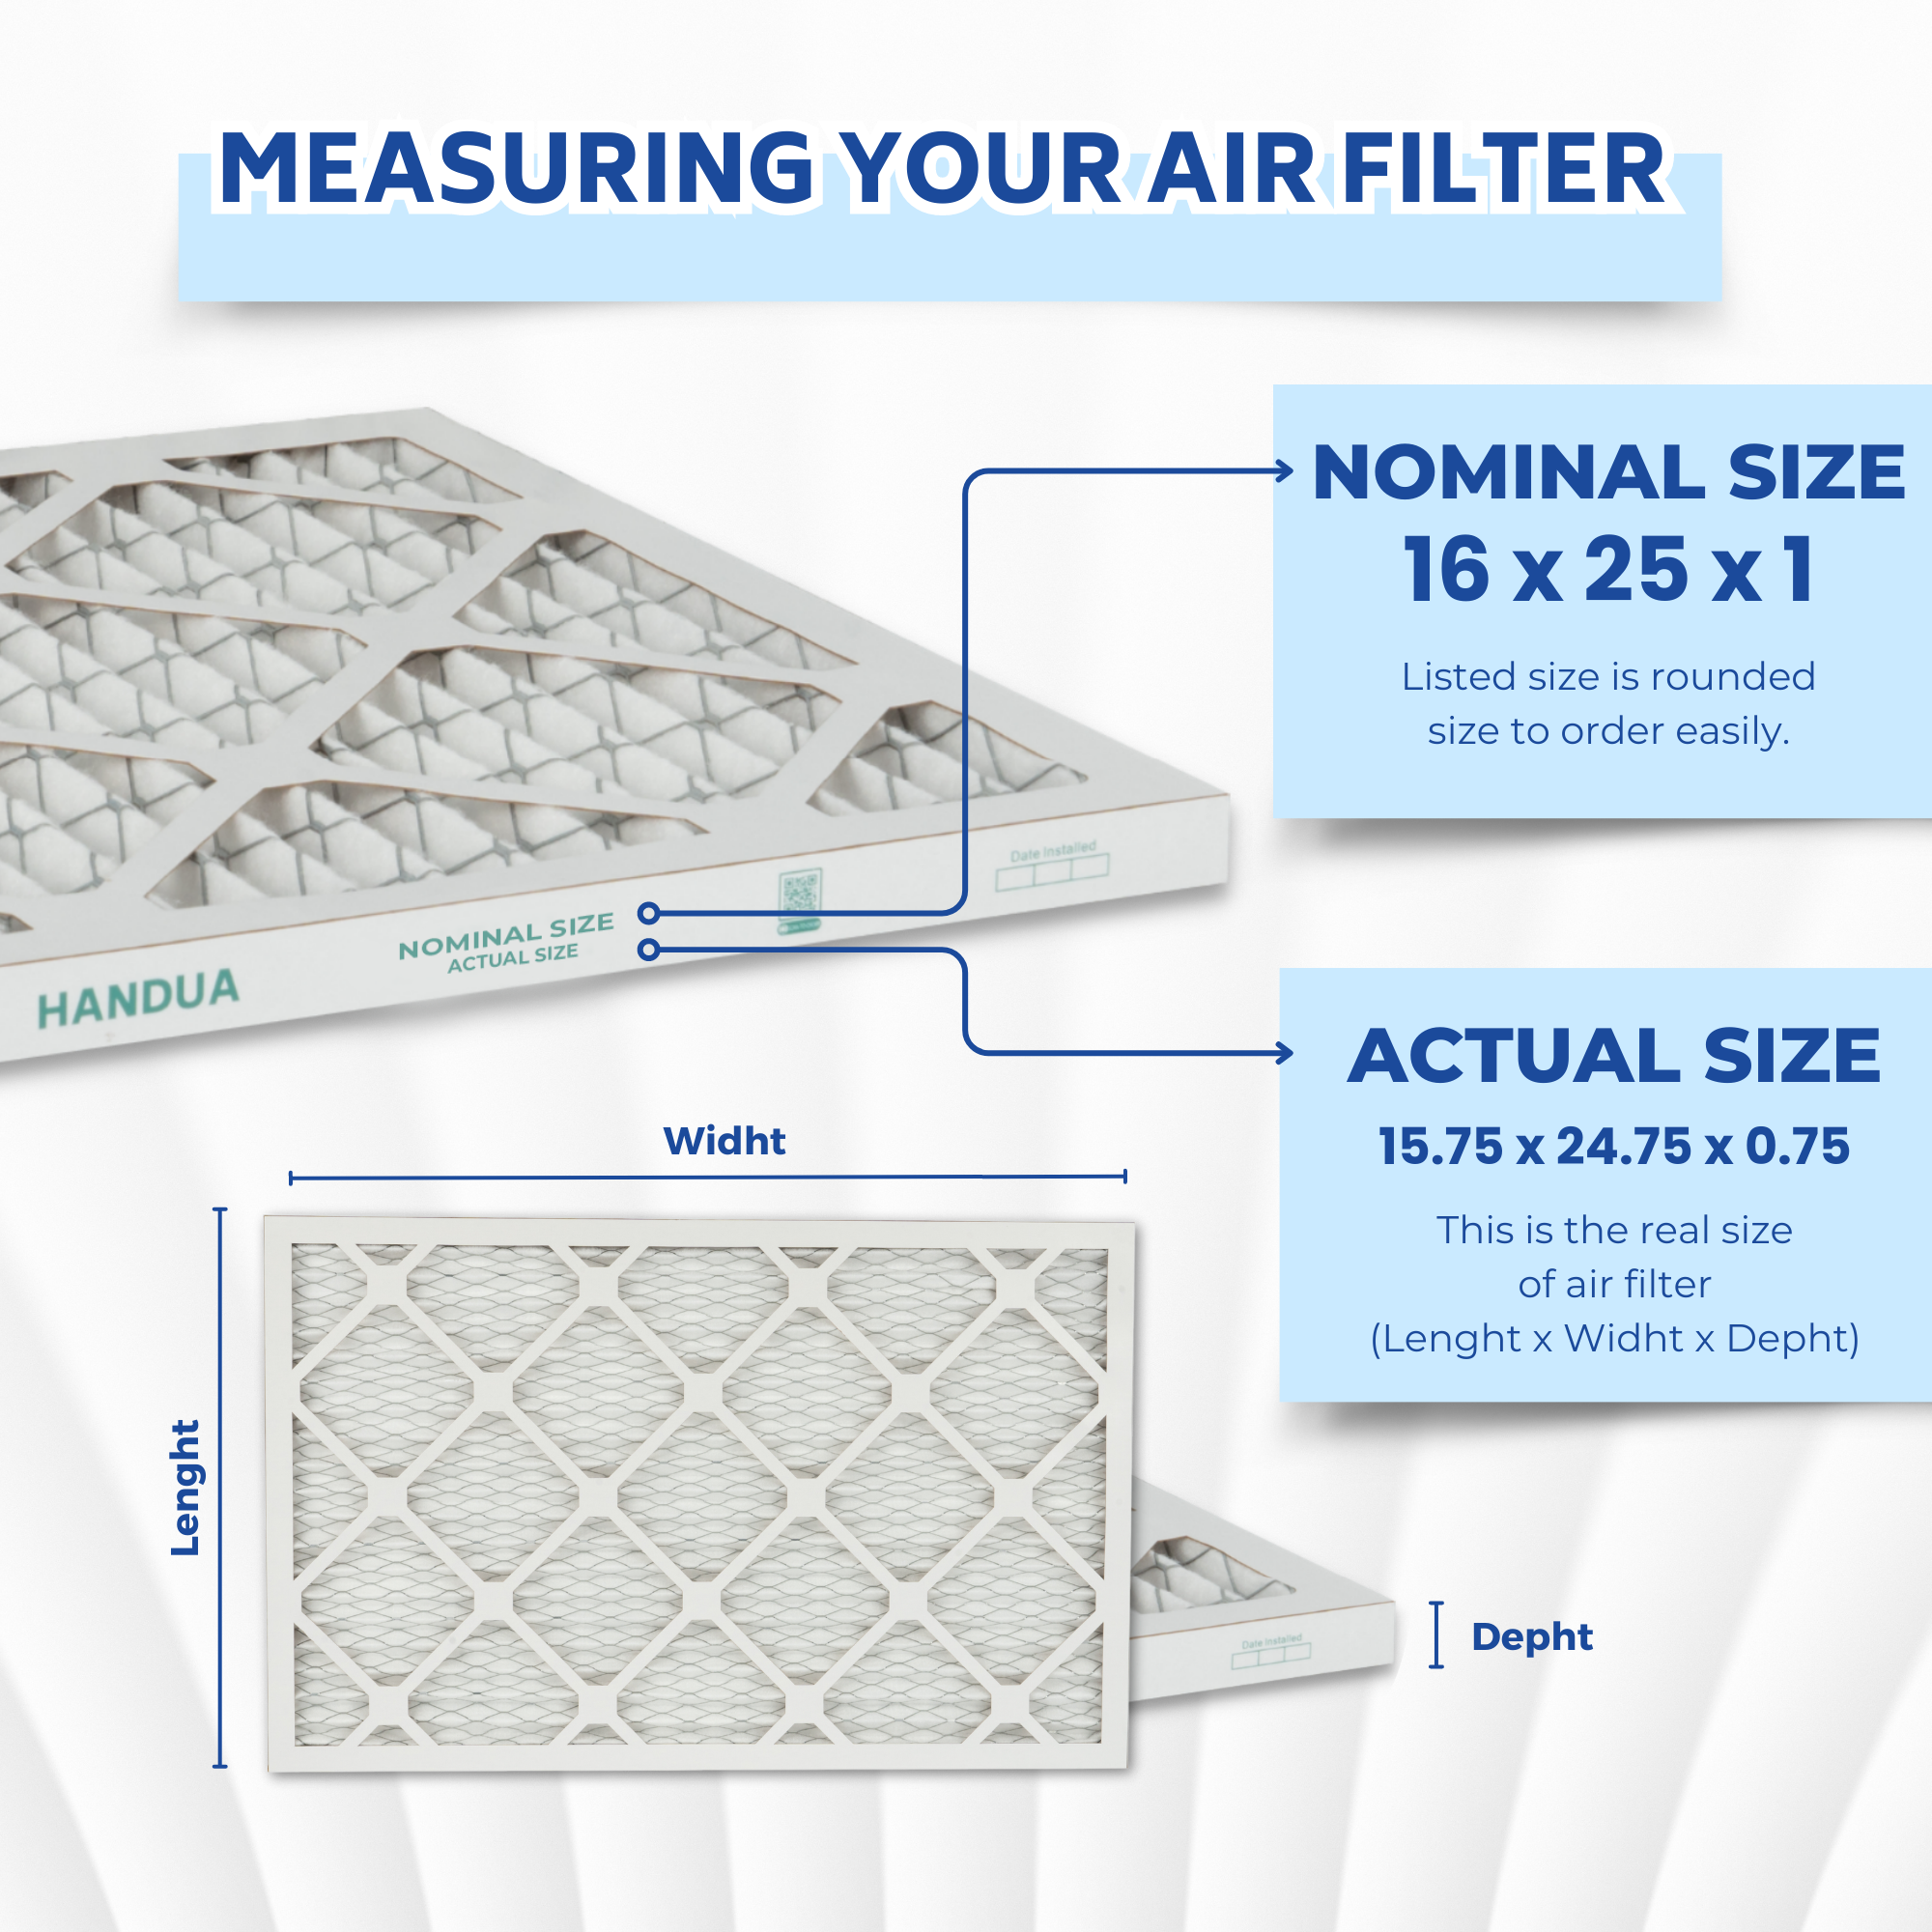 Handua 16x25x1 Air Filter MERV 11 Allergen Control, Plated Furnace AC Air Replacement Filter, 4 Pack (Actual Size: 15.75" x 24.75" x 0.75")